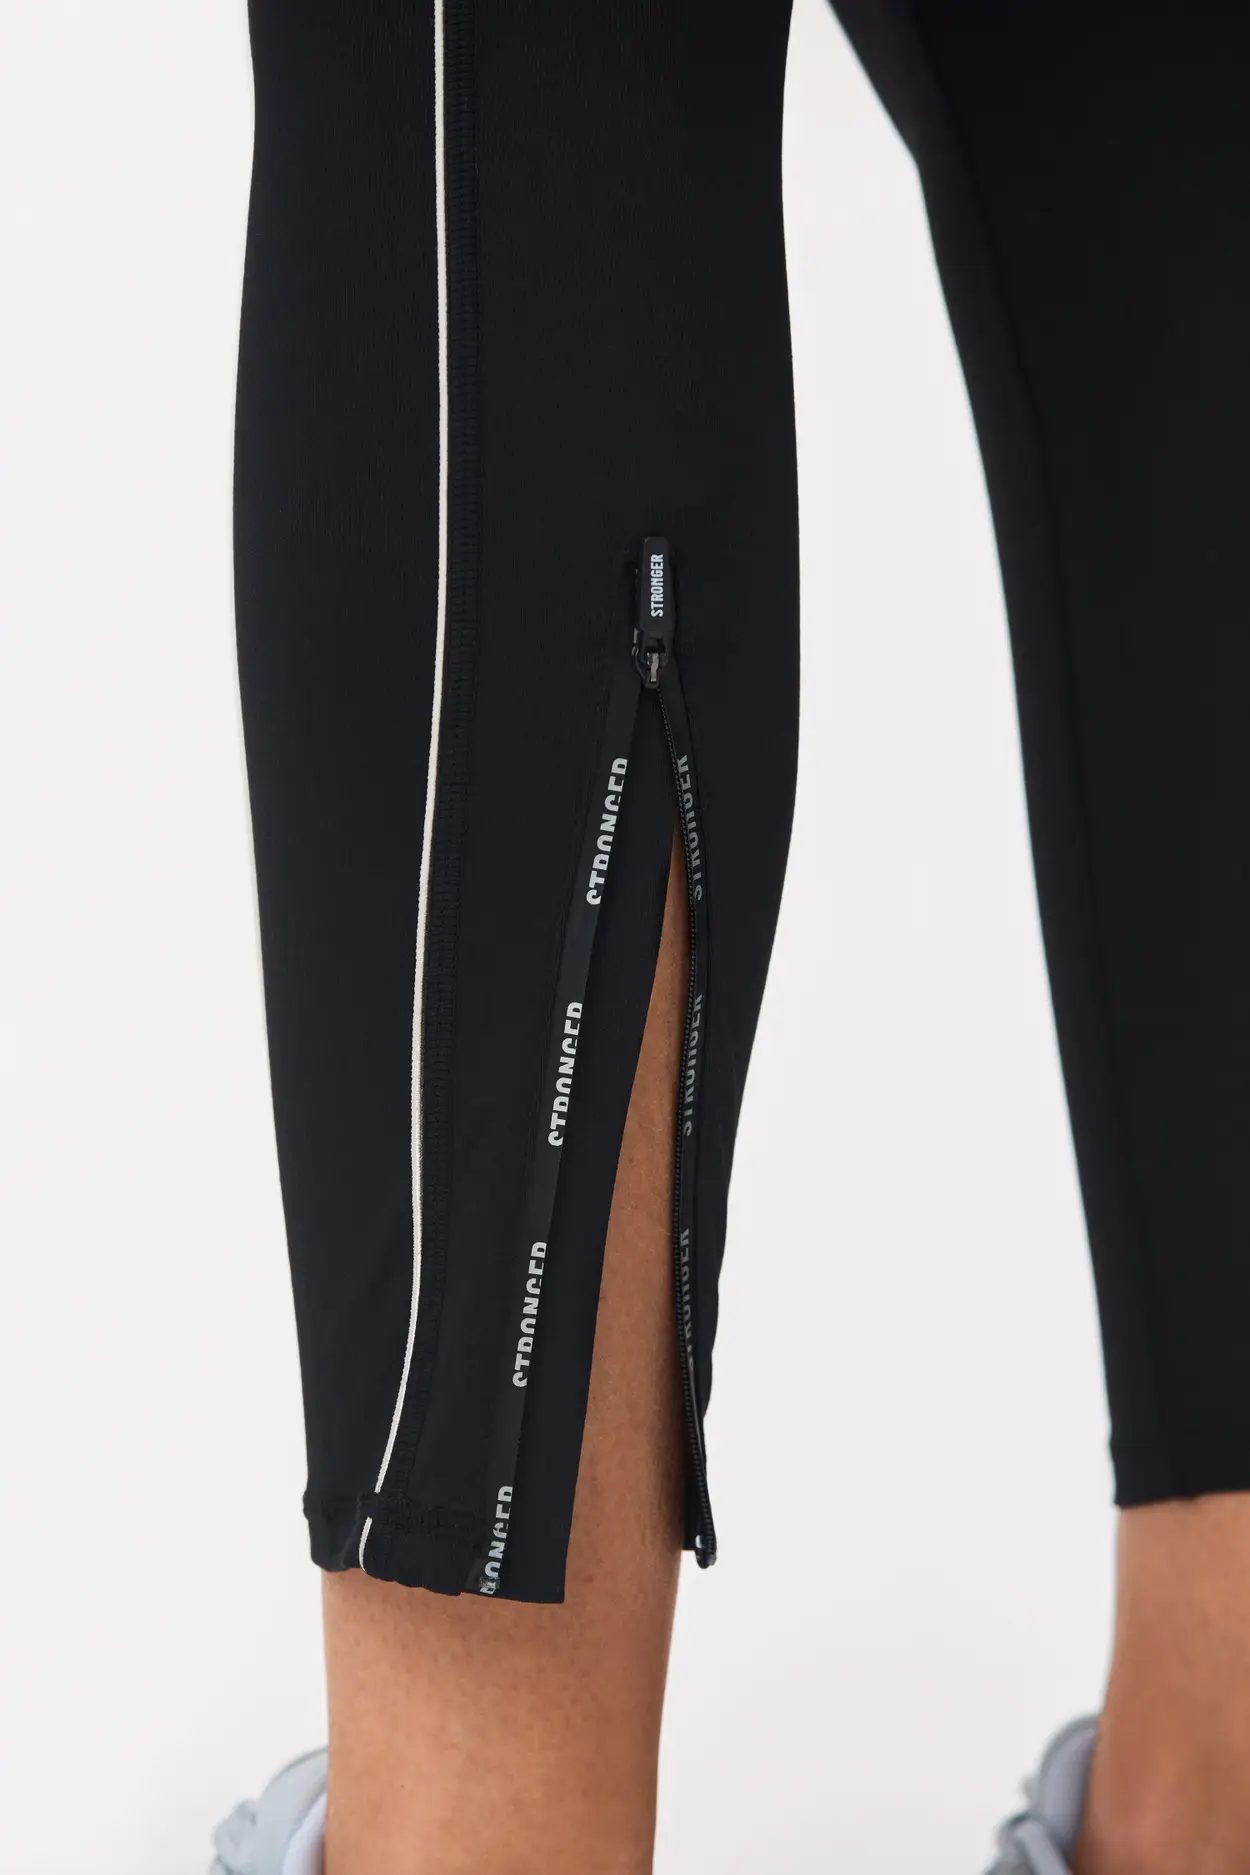 Extreme Weather Clothing Thermal Label V Yoga Pants Proskins Slim Anti  Cellite Leggings Cropped Running Leggings Women Black : :  Fashion